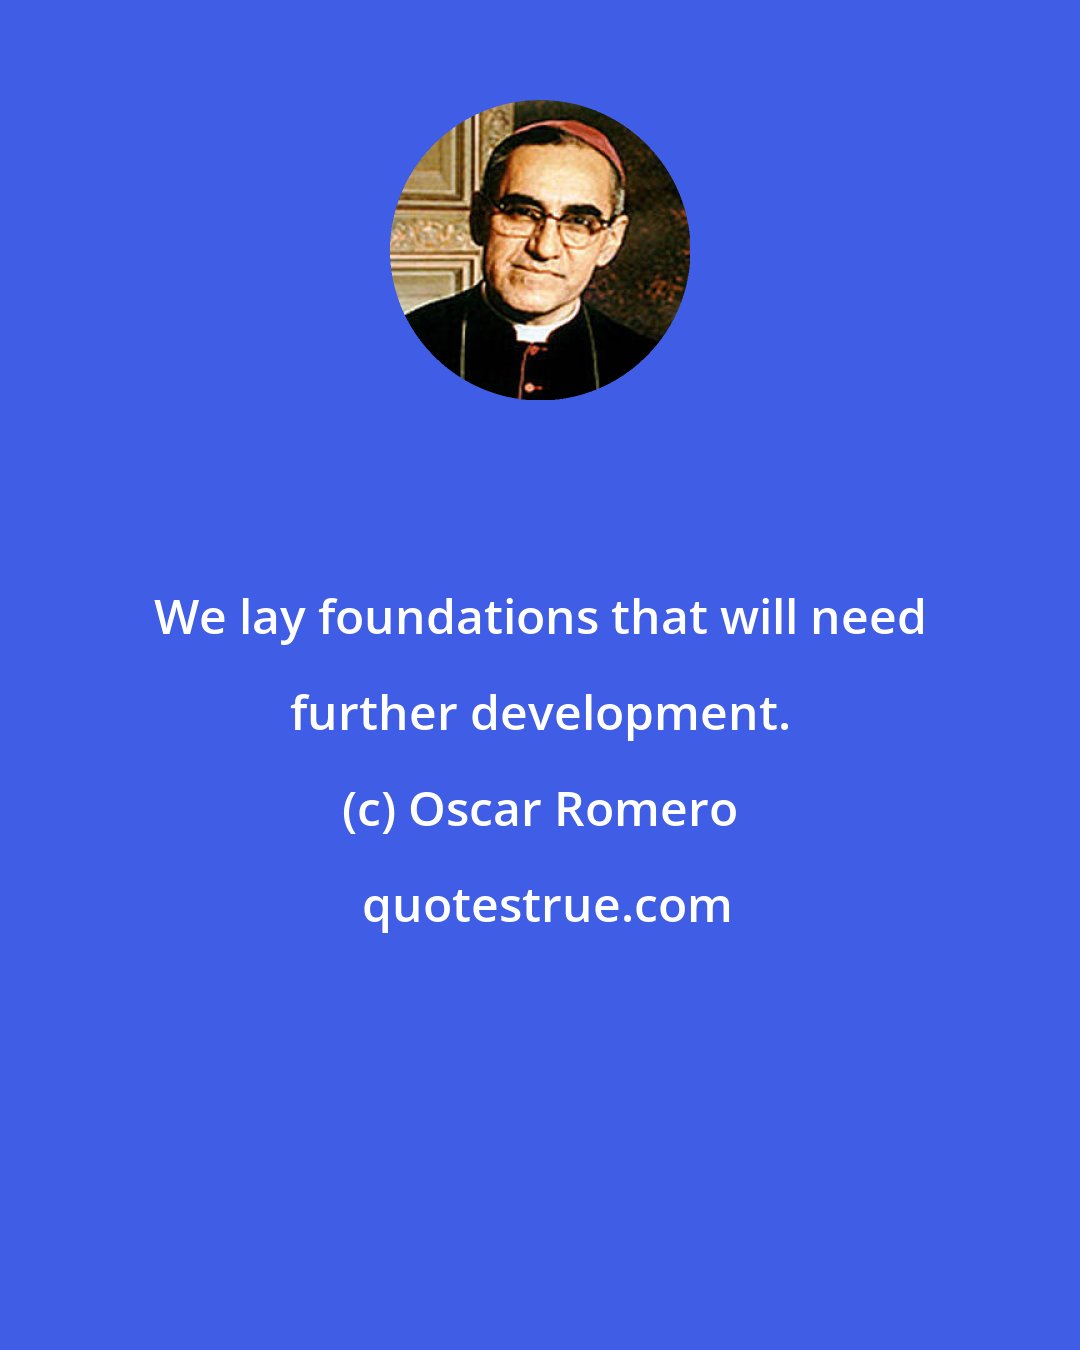 Oscar Romero: We lay foundations that will need further development.